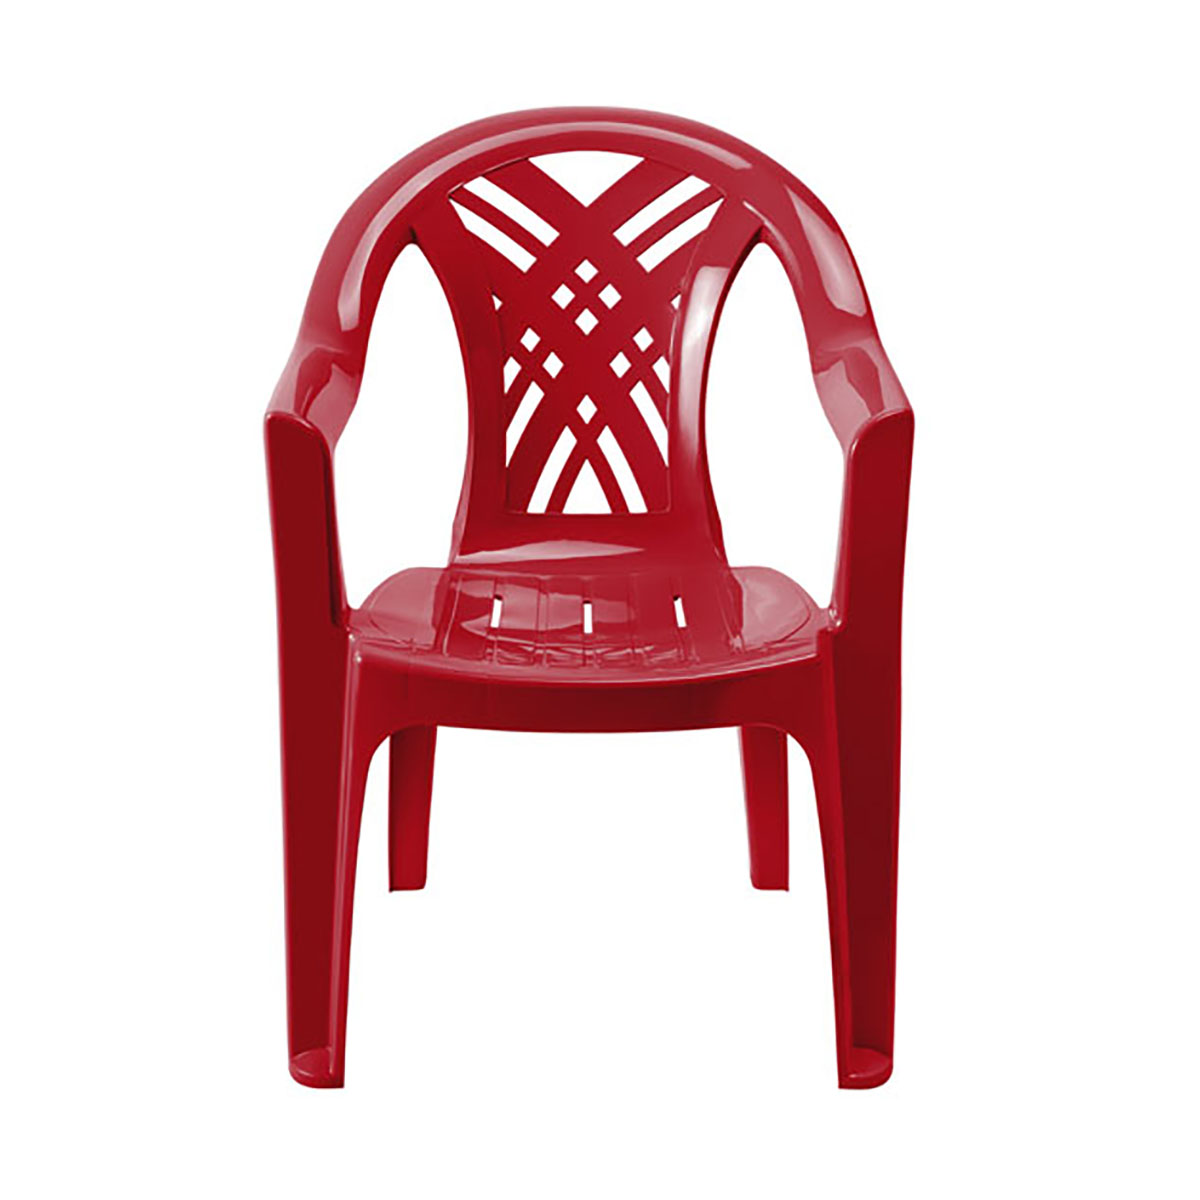 Садовое кресло Стандарт пластик Престиж-2 217489 60х66х84см вишневое